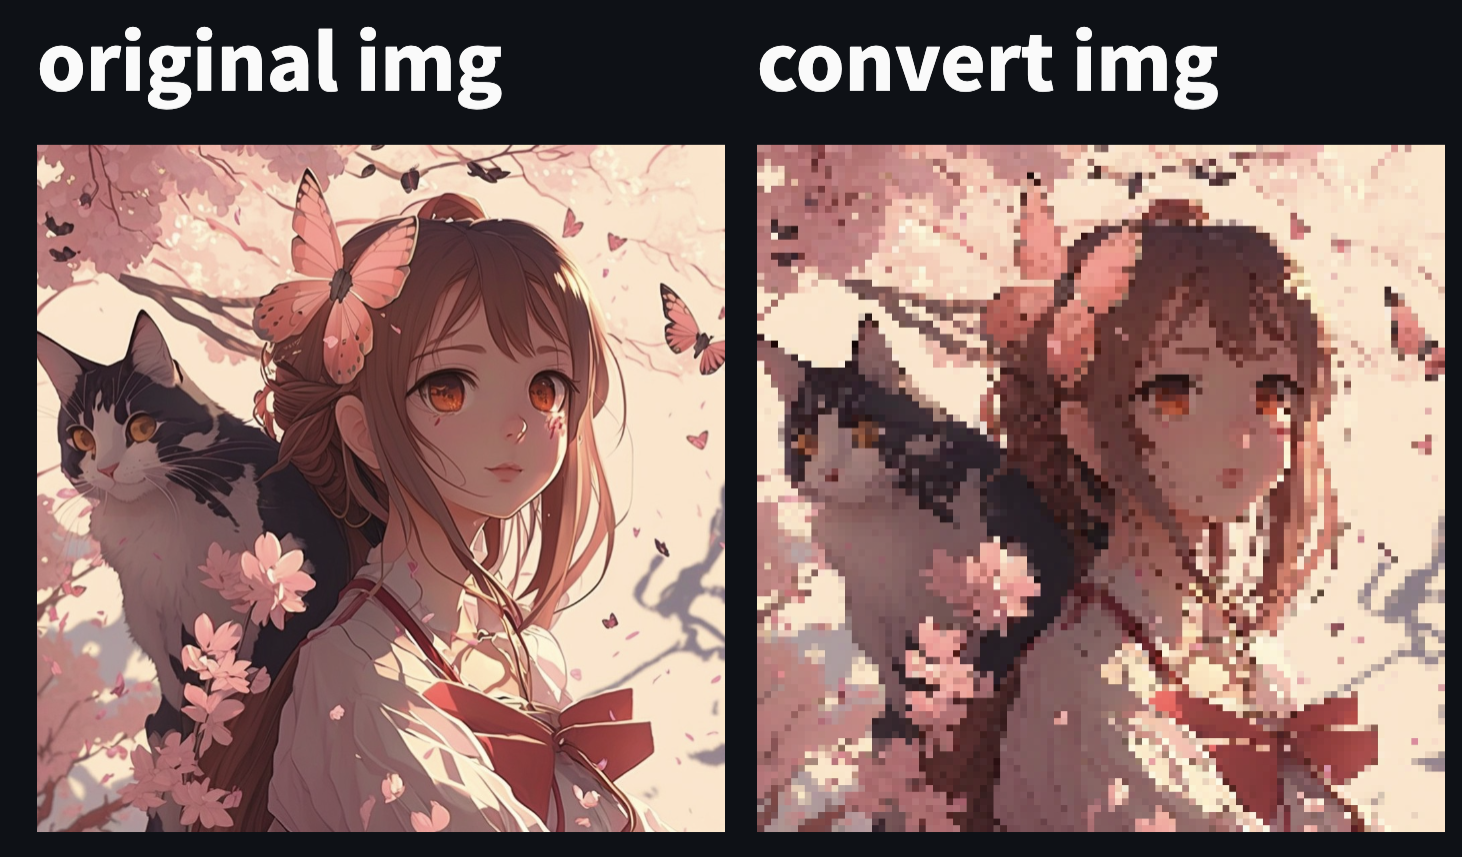 Convert images into pixel art